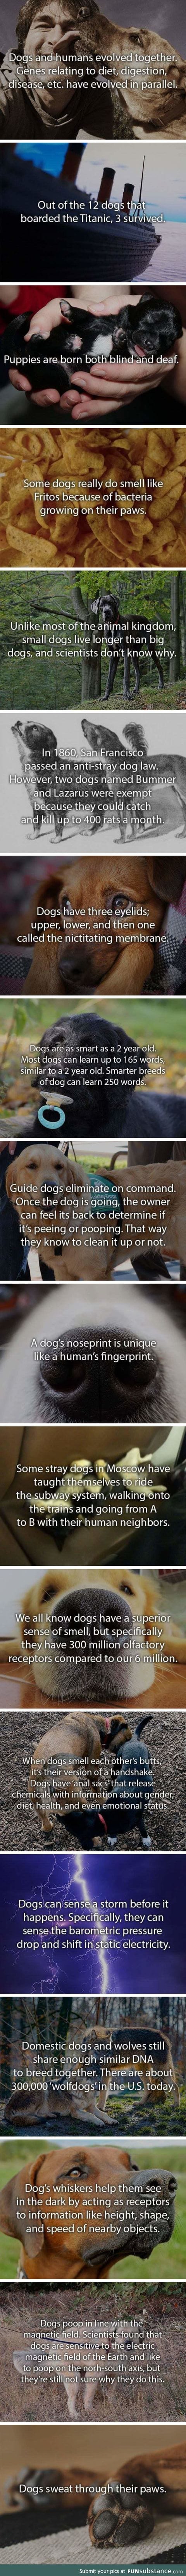 Doggo facts